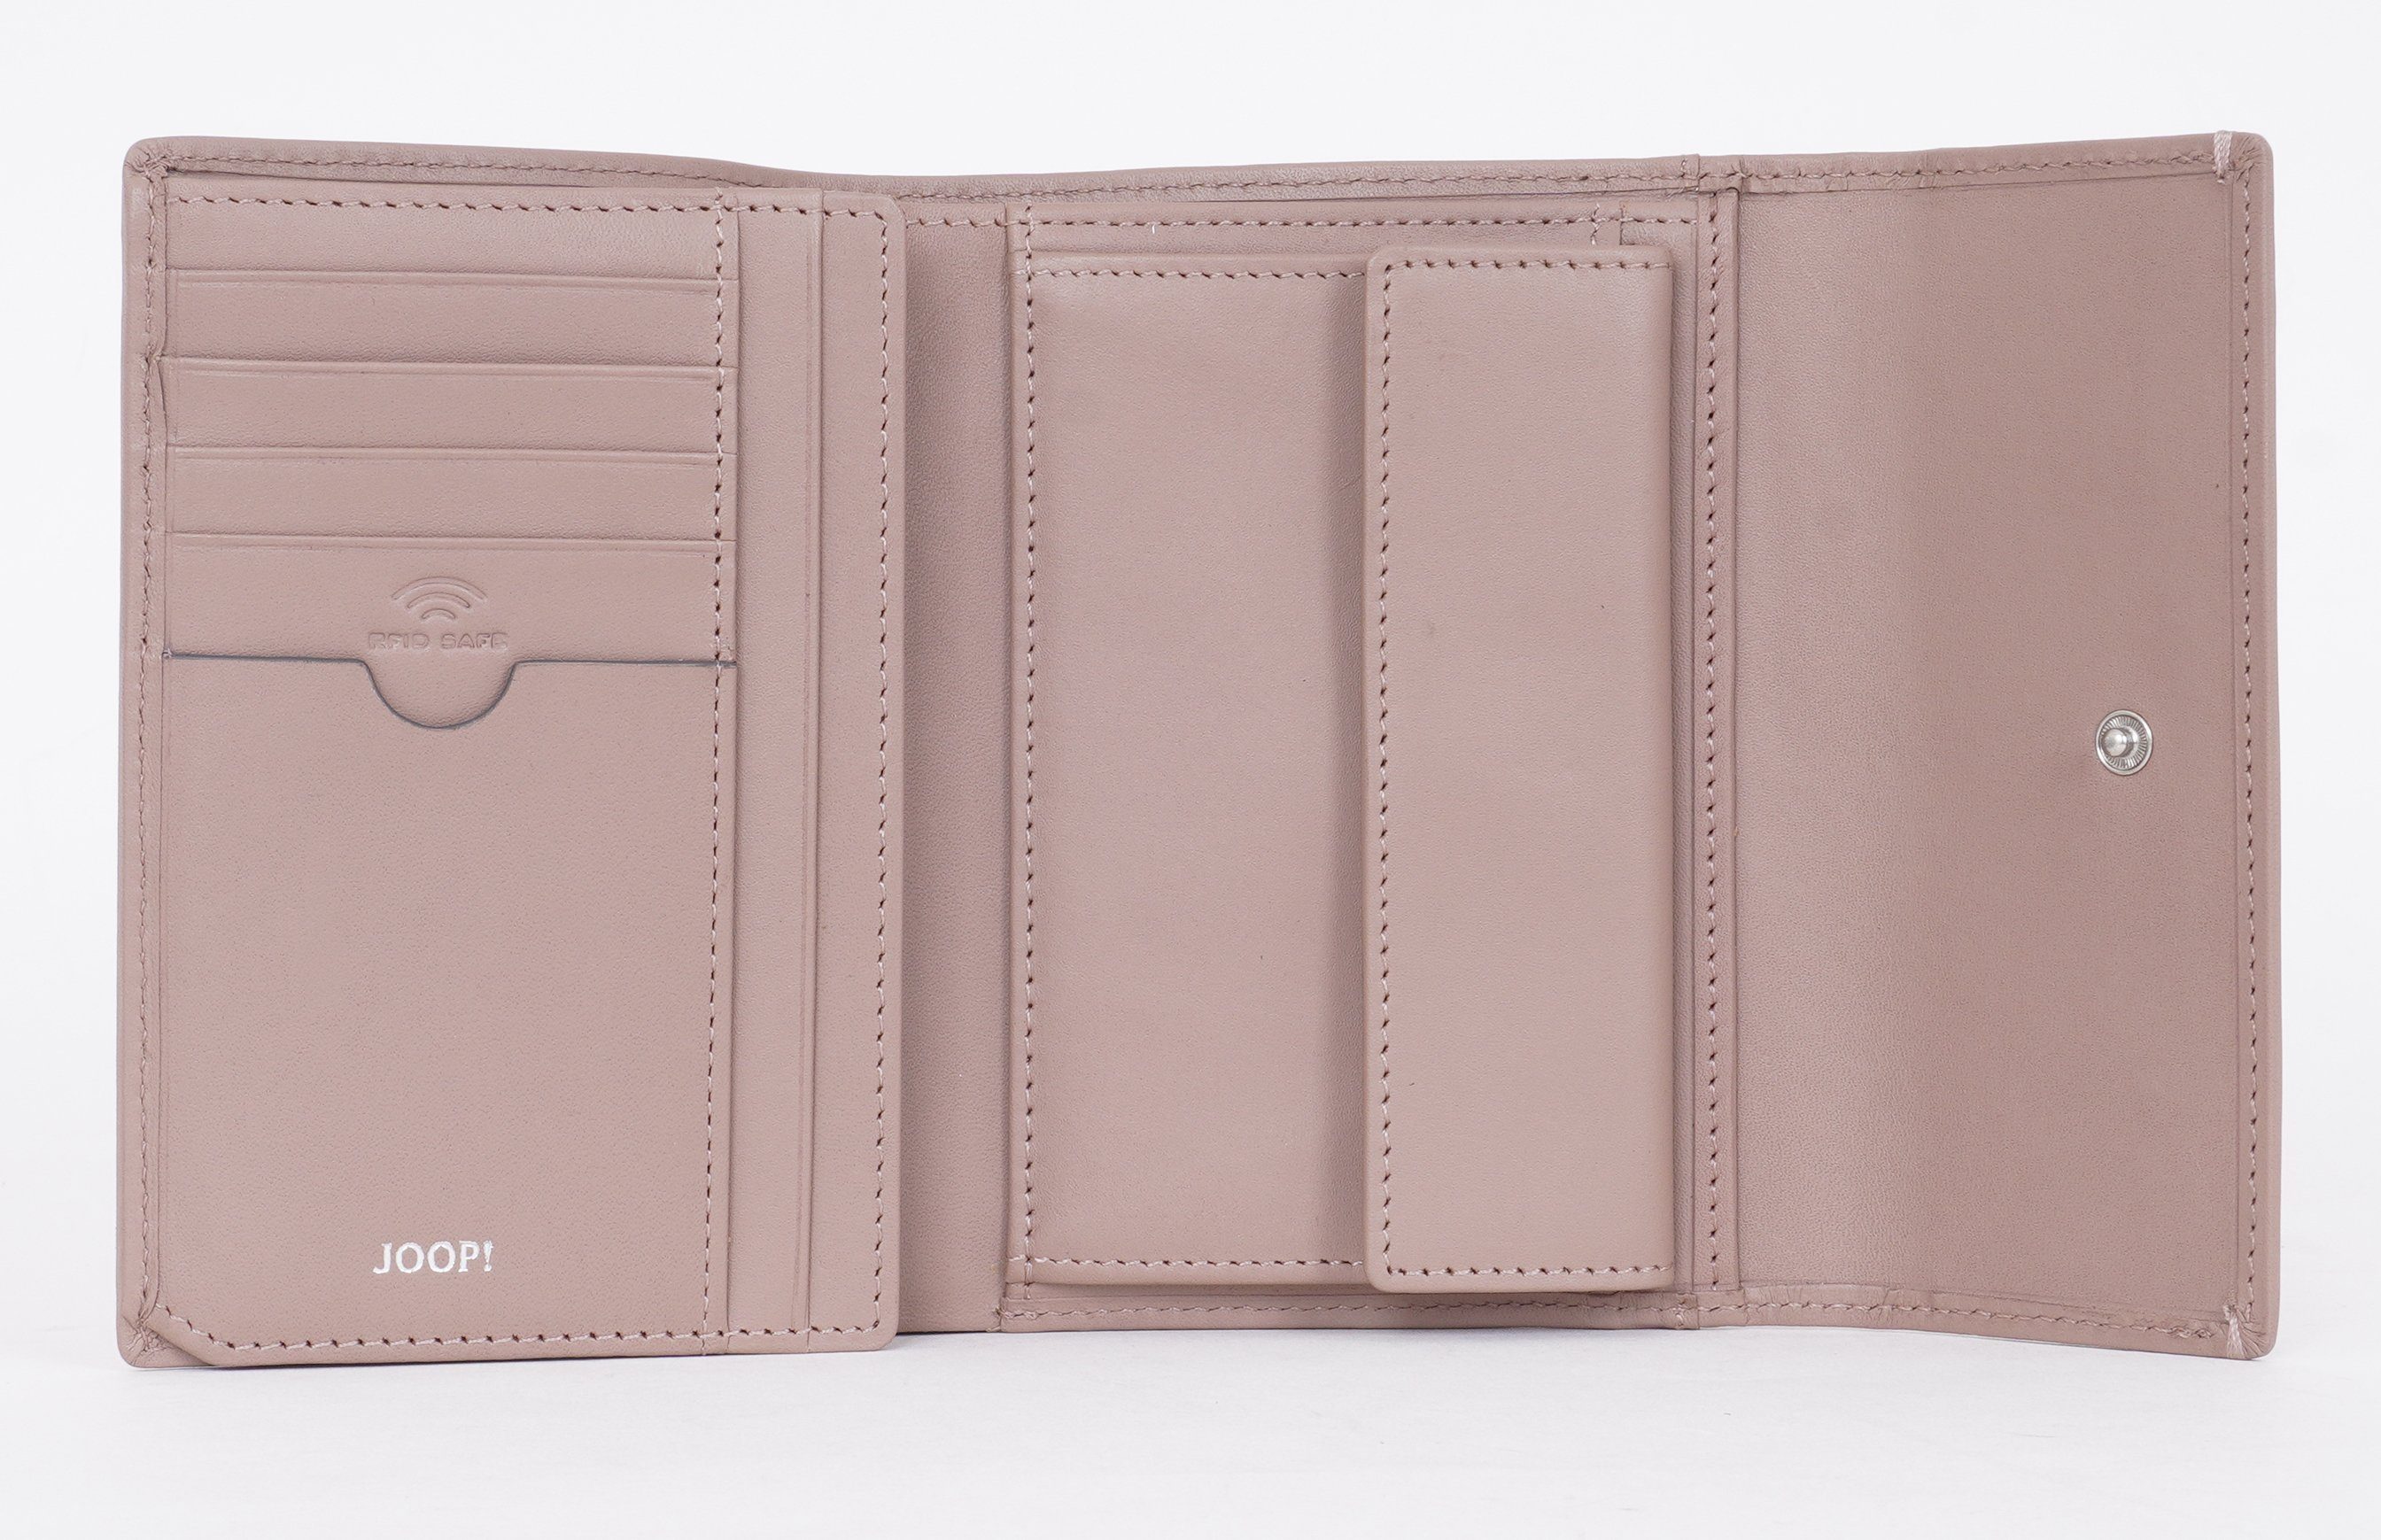 Joop! Geldbörse sofisticato 1.0 cosma mh10f, in Design rosa schlichtem purse